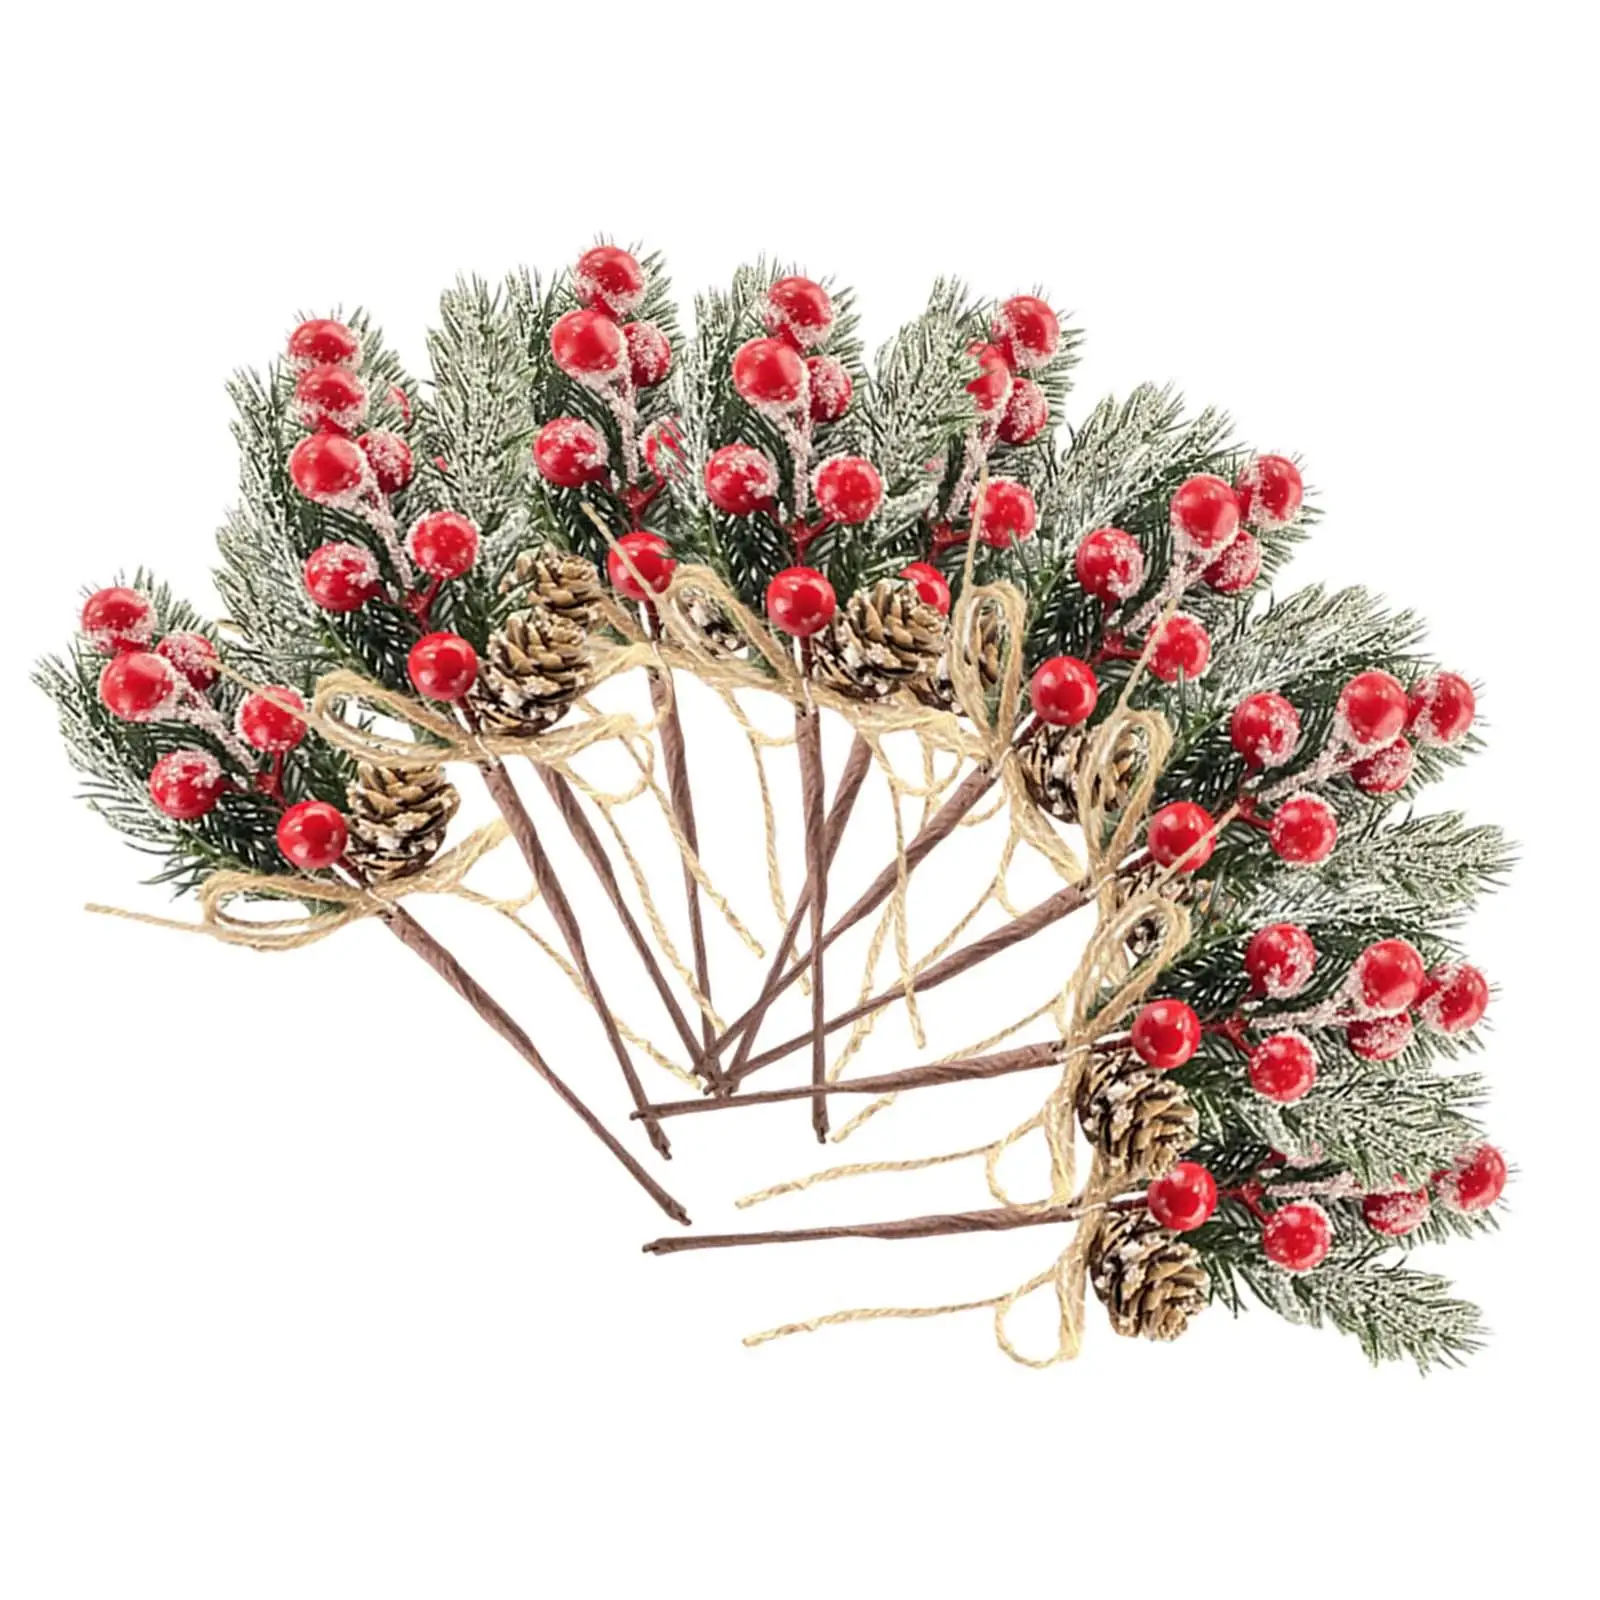 10 Pieces Artificial Christmas Picks Artificial Berry Stems for Crafts DIY Holiday Decor Garland Christmas Flower Arrangements